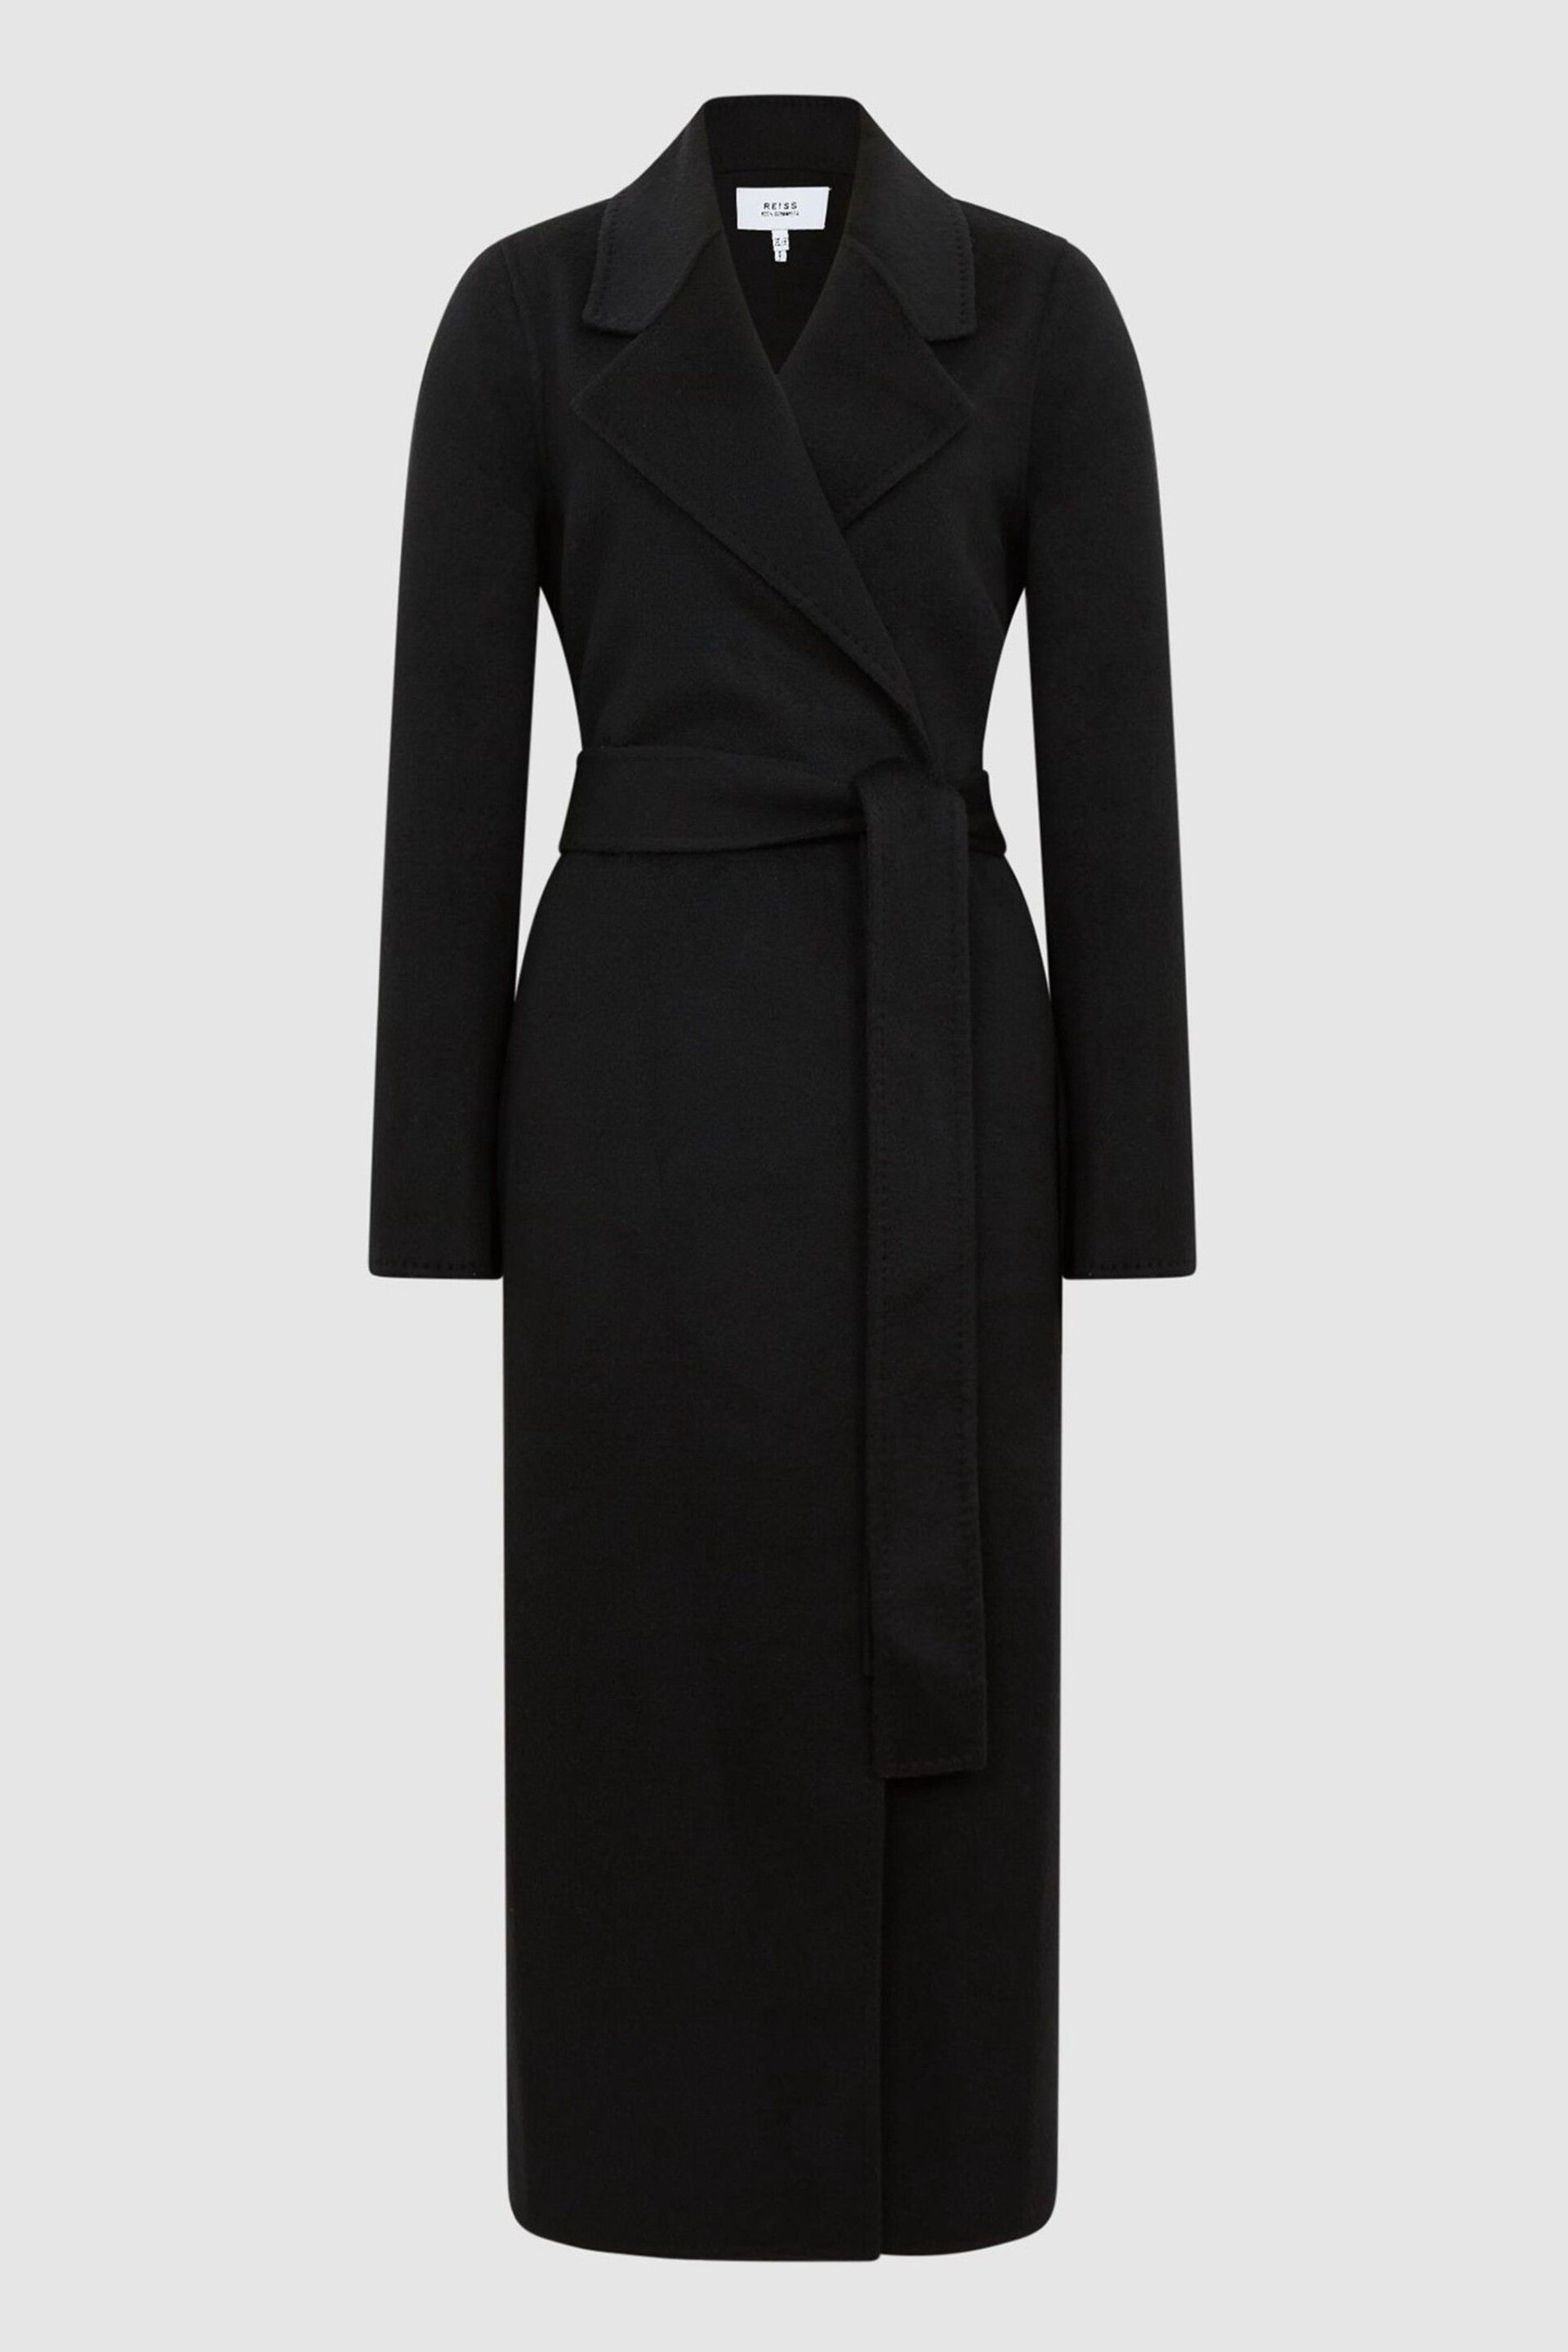 Reiss Black Honor 100% Cashmere Wool Blindseam Long Coat - Image 2 of 8